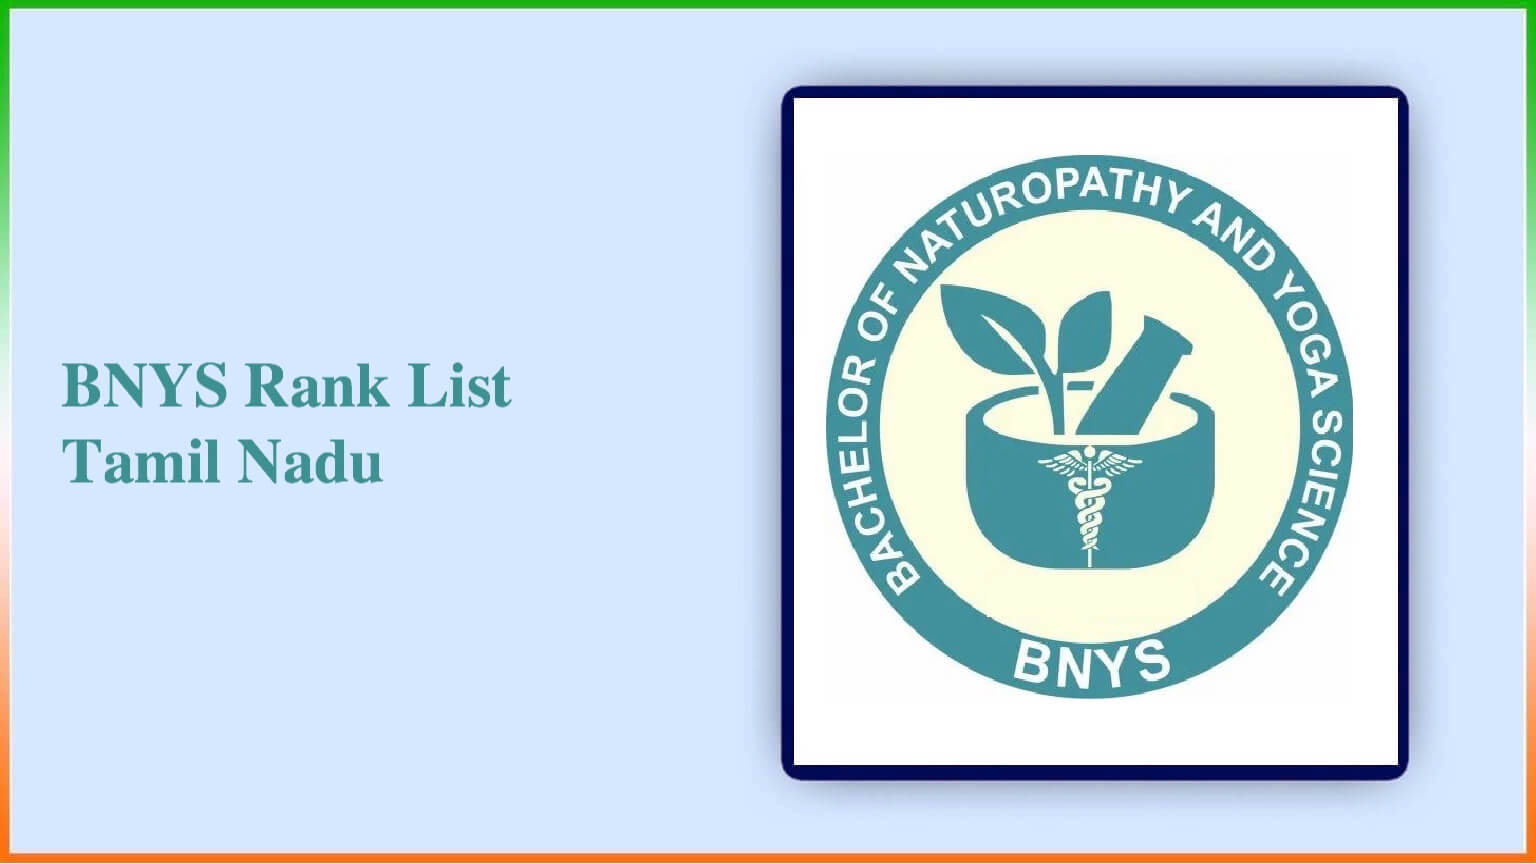 Bnys Rank List Tamil Nadu